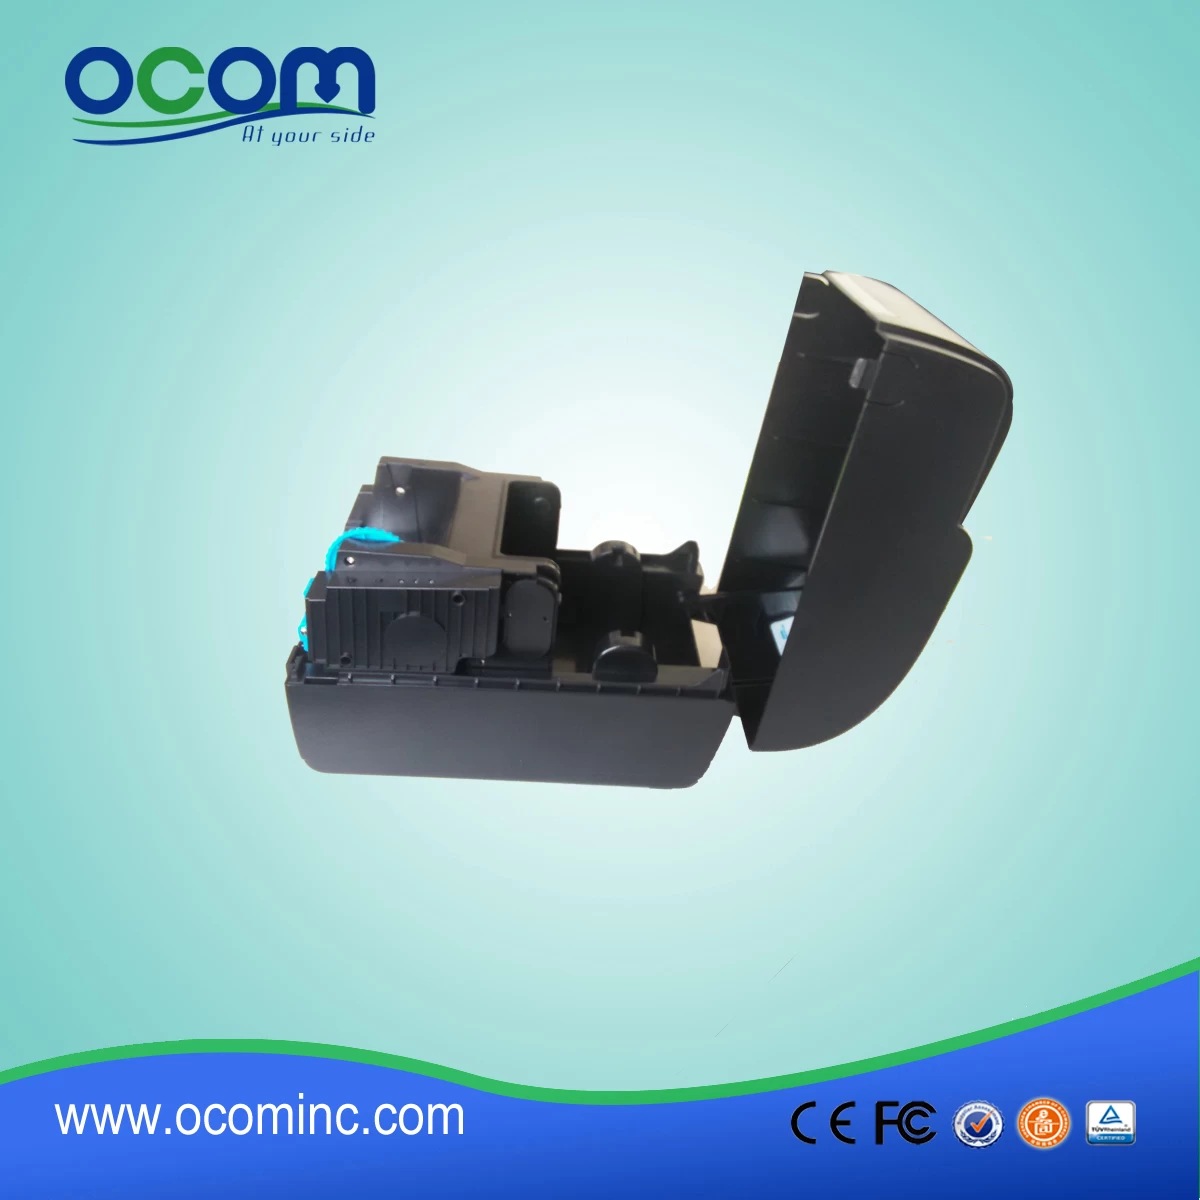 Thermal Transfer and Direct Thermal Barcode Label Printer (Model No.: OCBP-003)